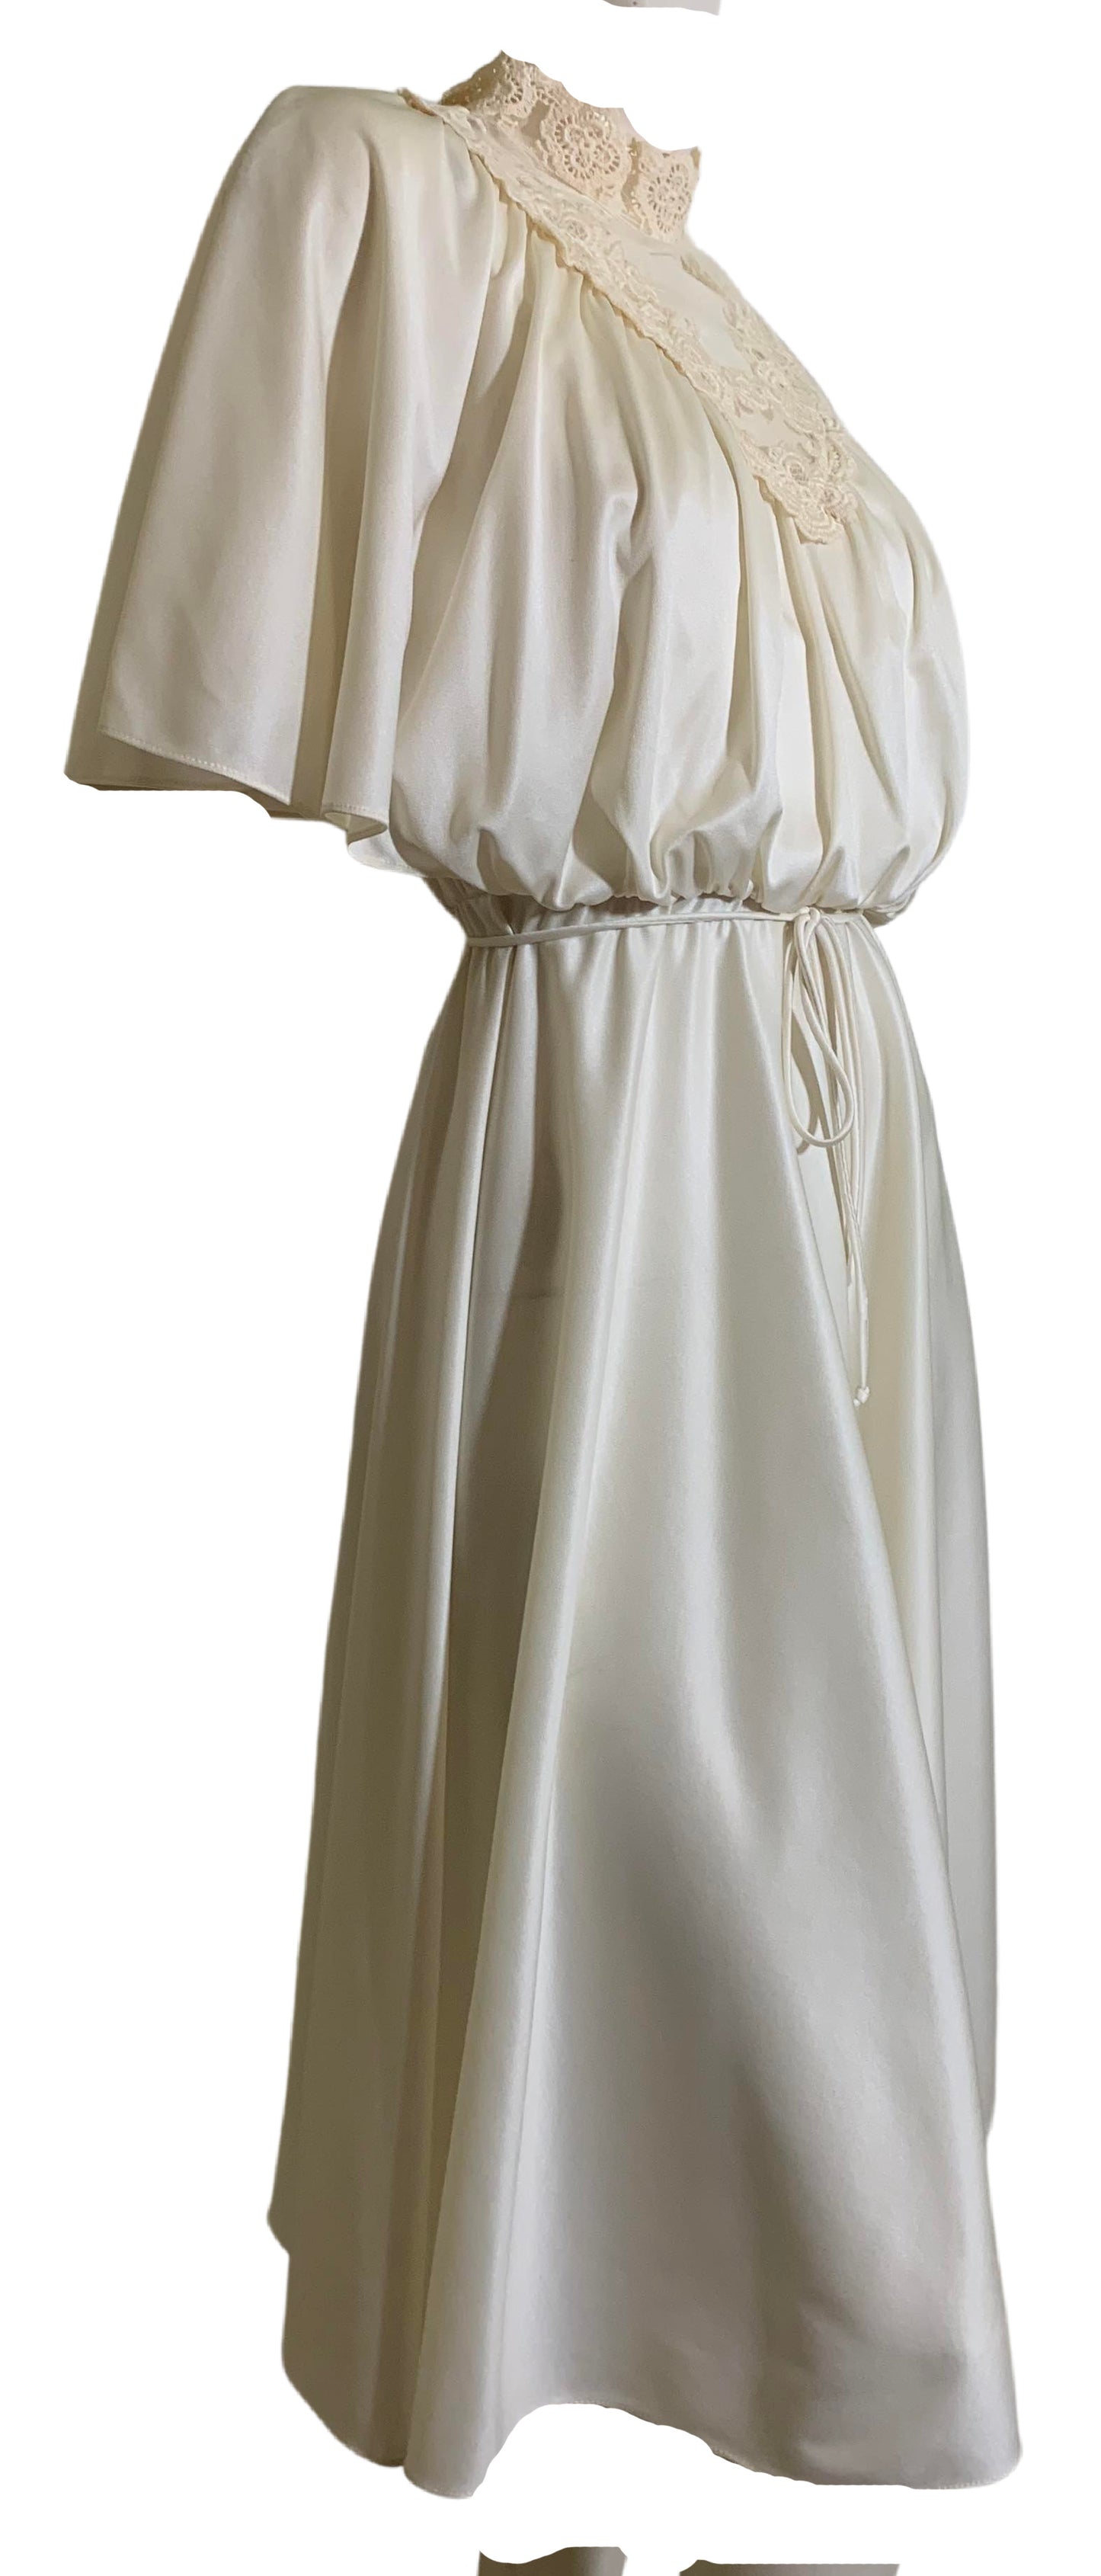 Gunne Style Ivory Jersey Nylon Blouson Bodice Lace Trimmed Dress circa 1970s